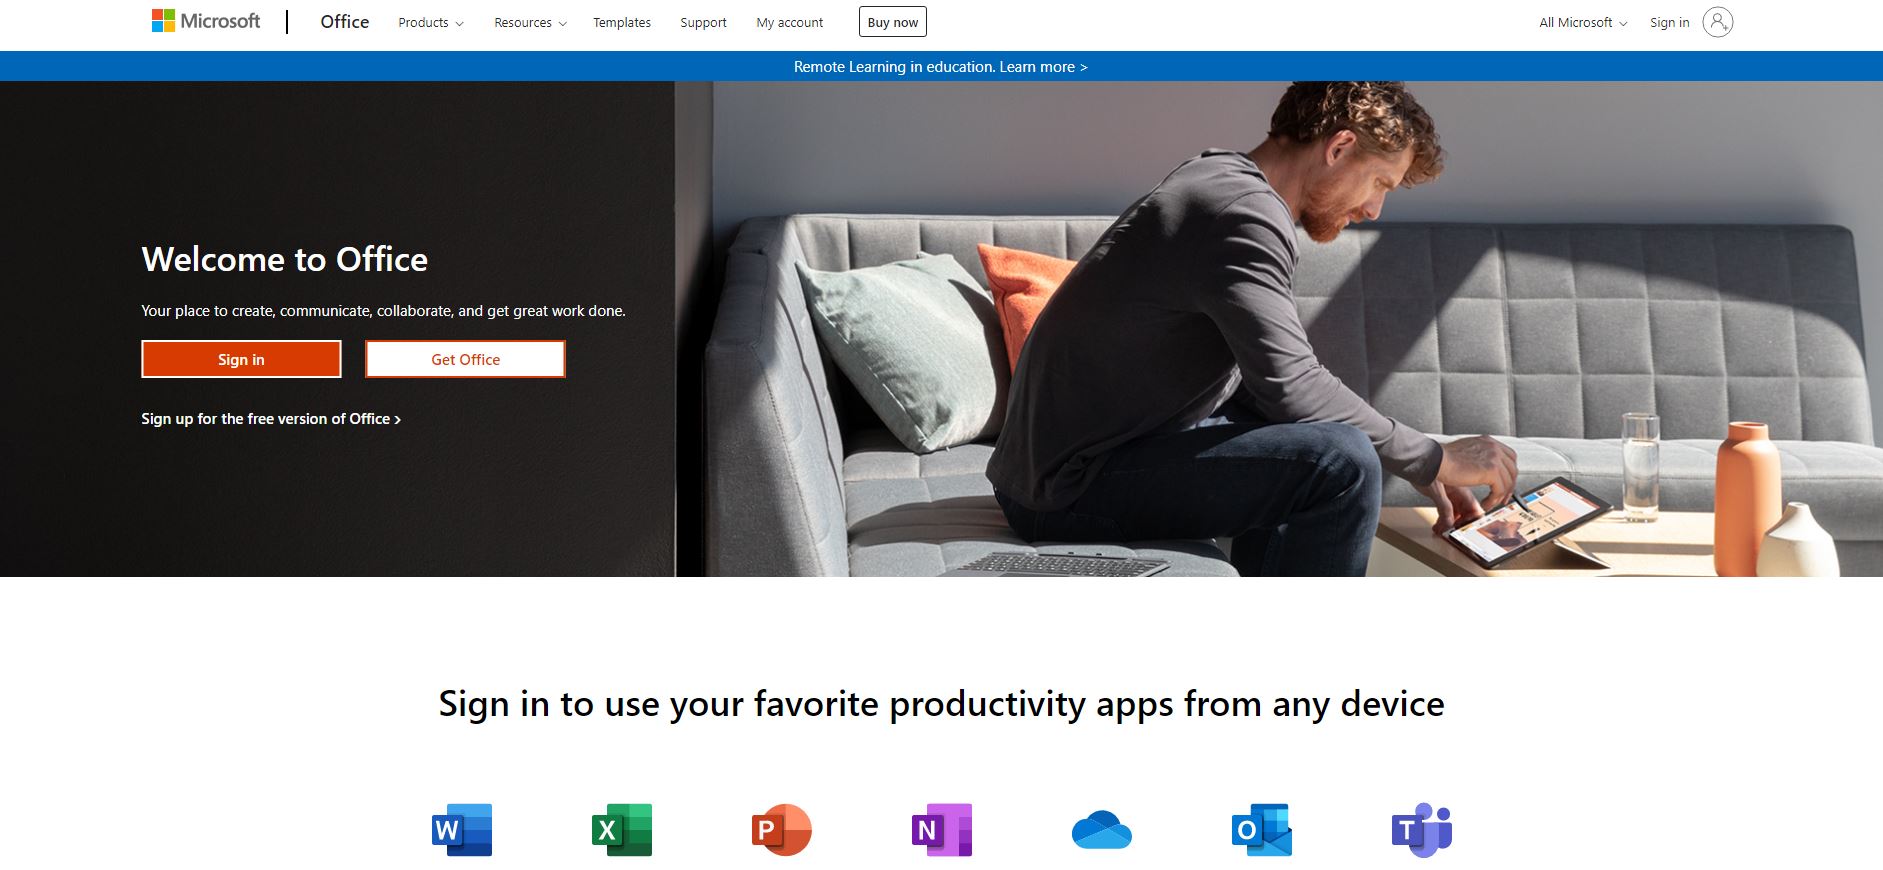 Office 365 homepage